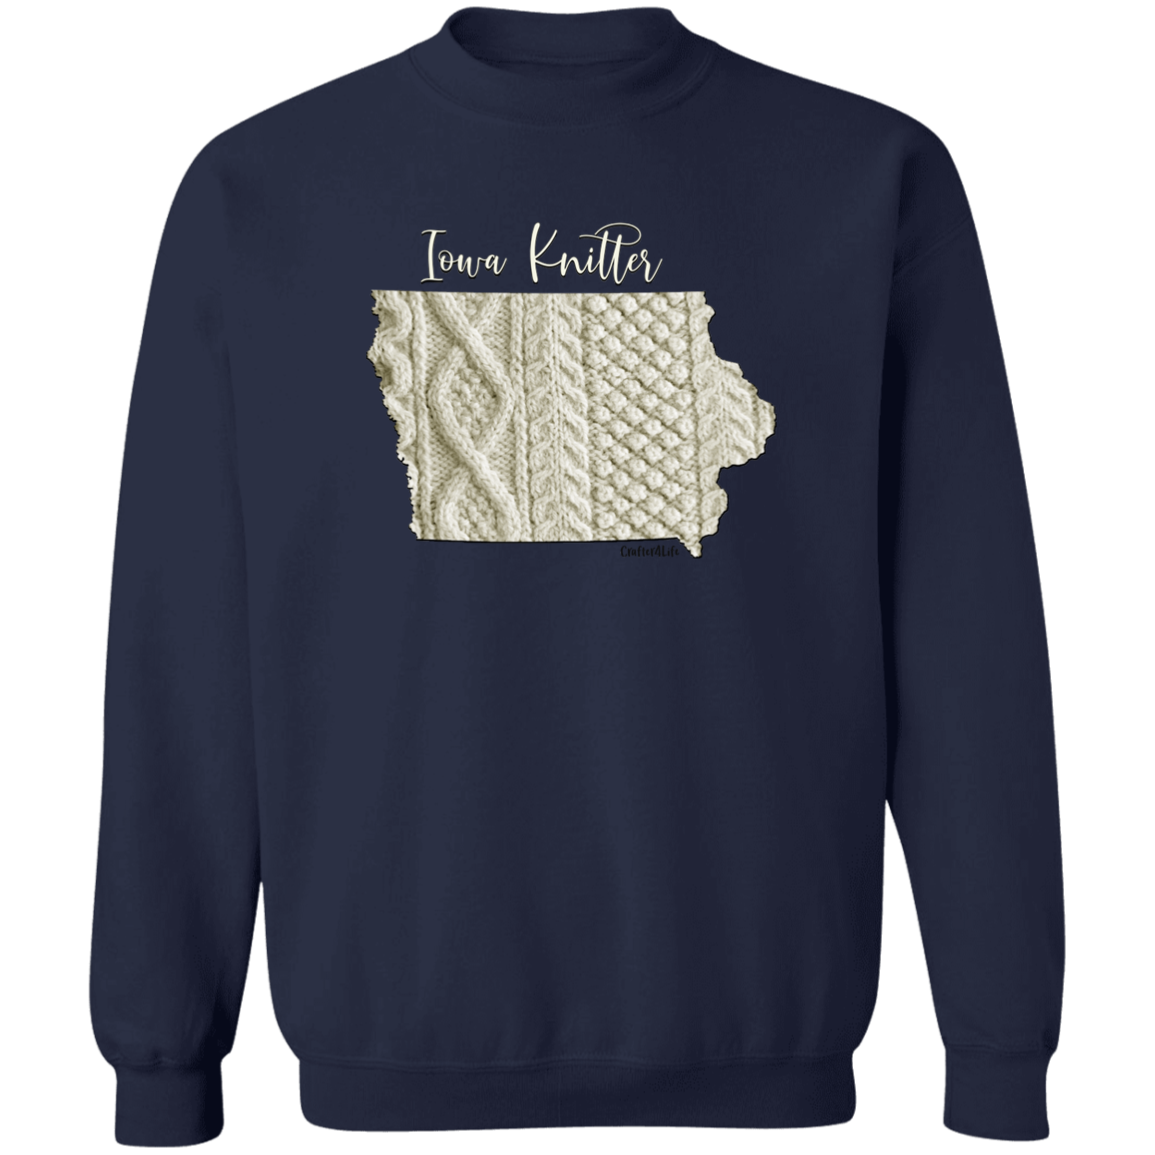 Iowa Knitter Crewneck Pullover Sweatshirt